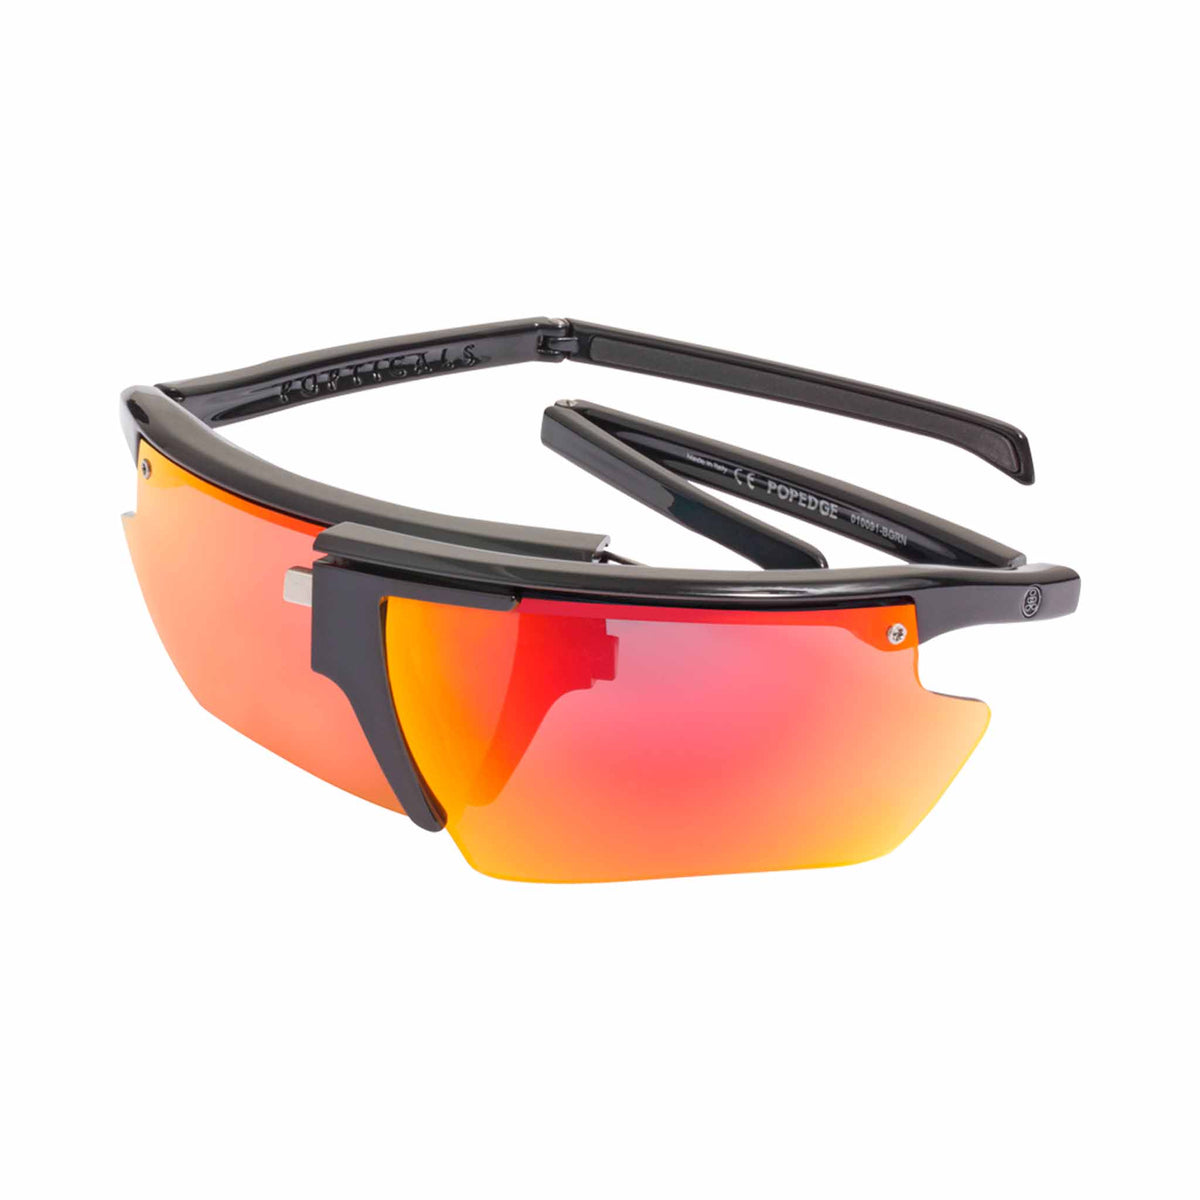 Popticals, Premium Compact Sunglasses, PopEdge, 010091-BGRN, Polarized Sunglasses, Gloss Black Frame, Gray Lenses with Red Mirror Finish, Spider View